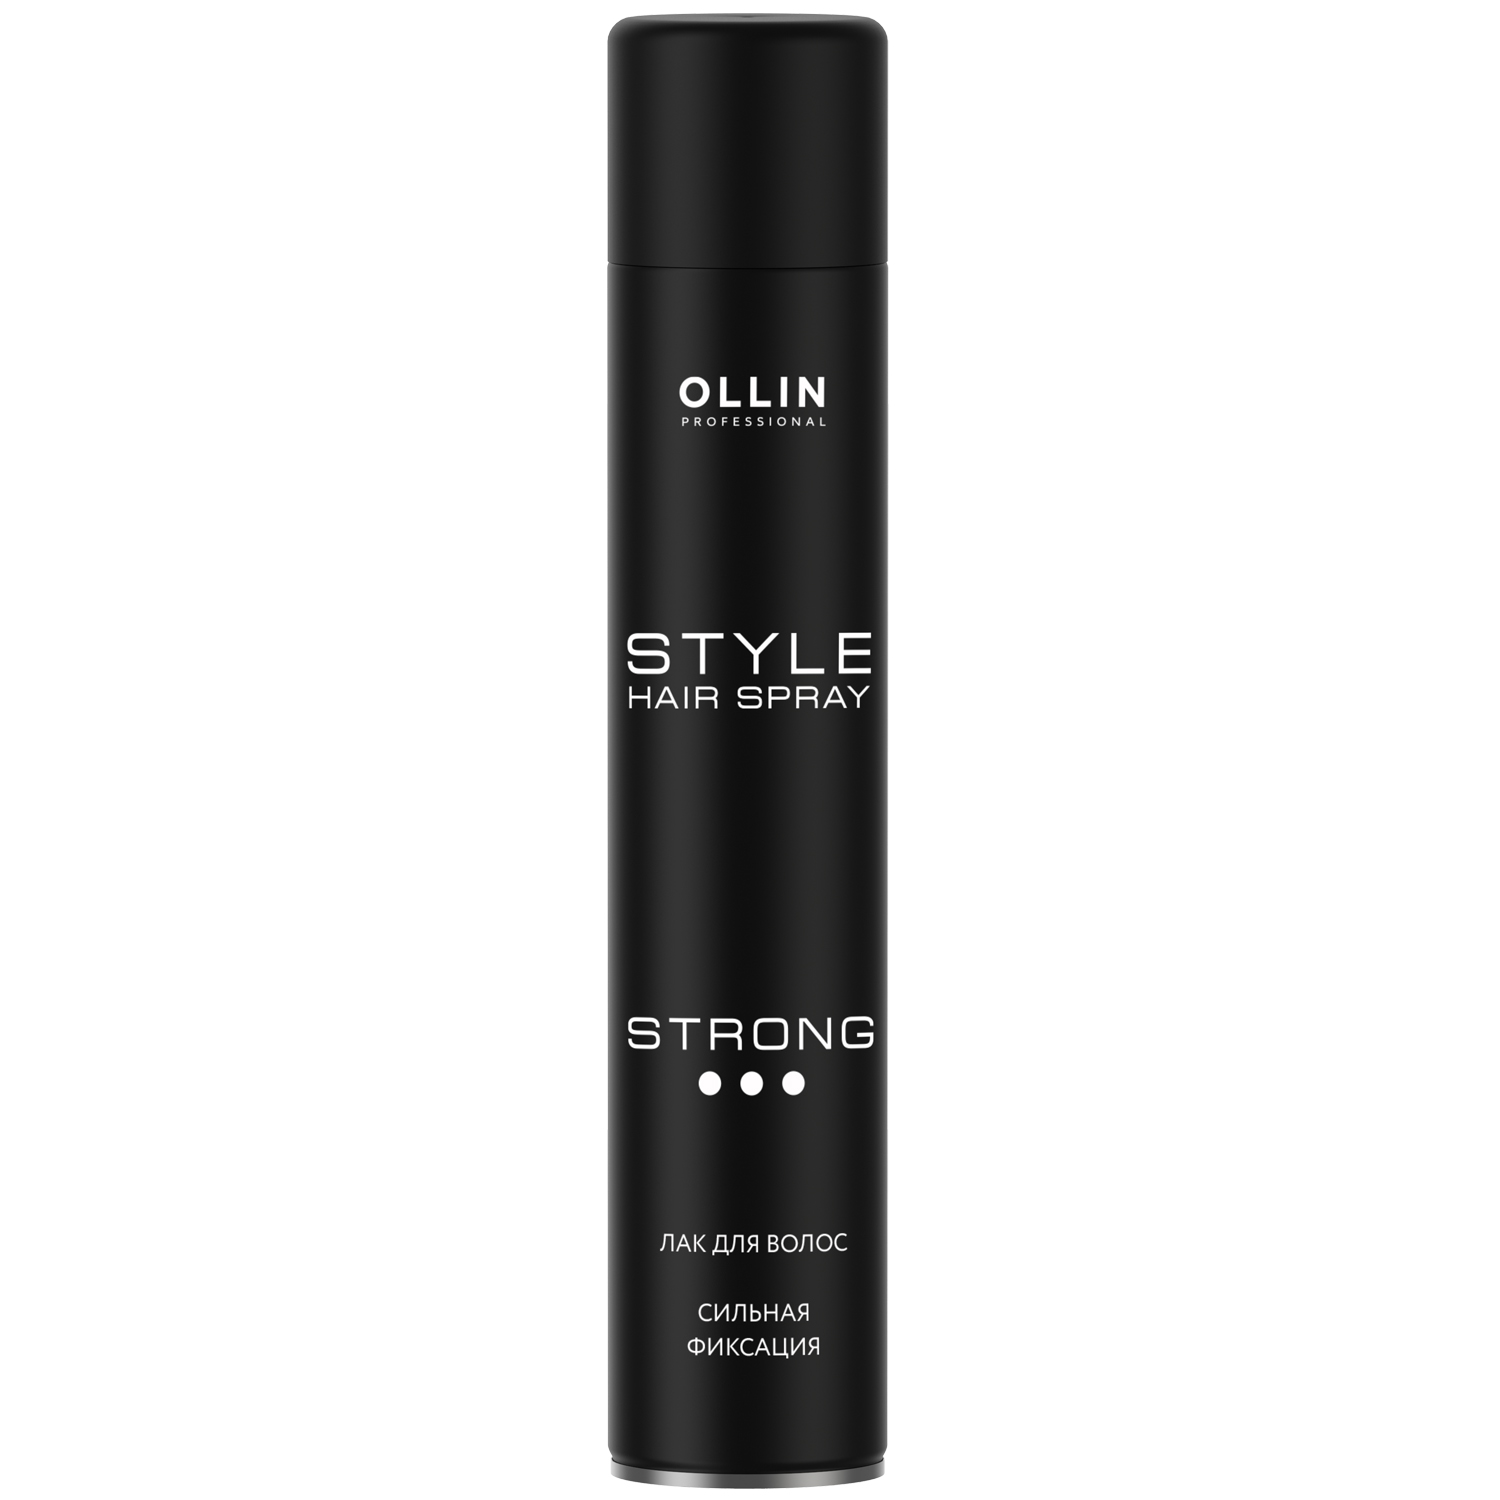 ollin лак для волос ollin professional style ультрасильной фиксации 500 мл Ollin Professional Лак для волос сильной фиксации, 500 мл (Ollin Professional, Style)